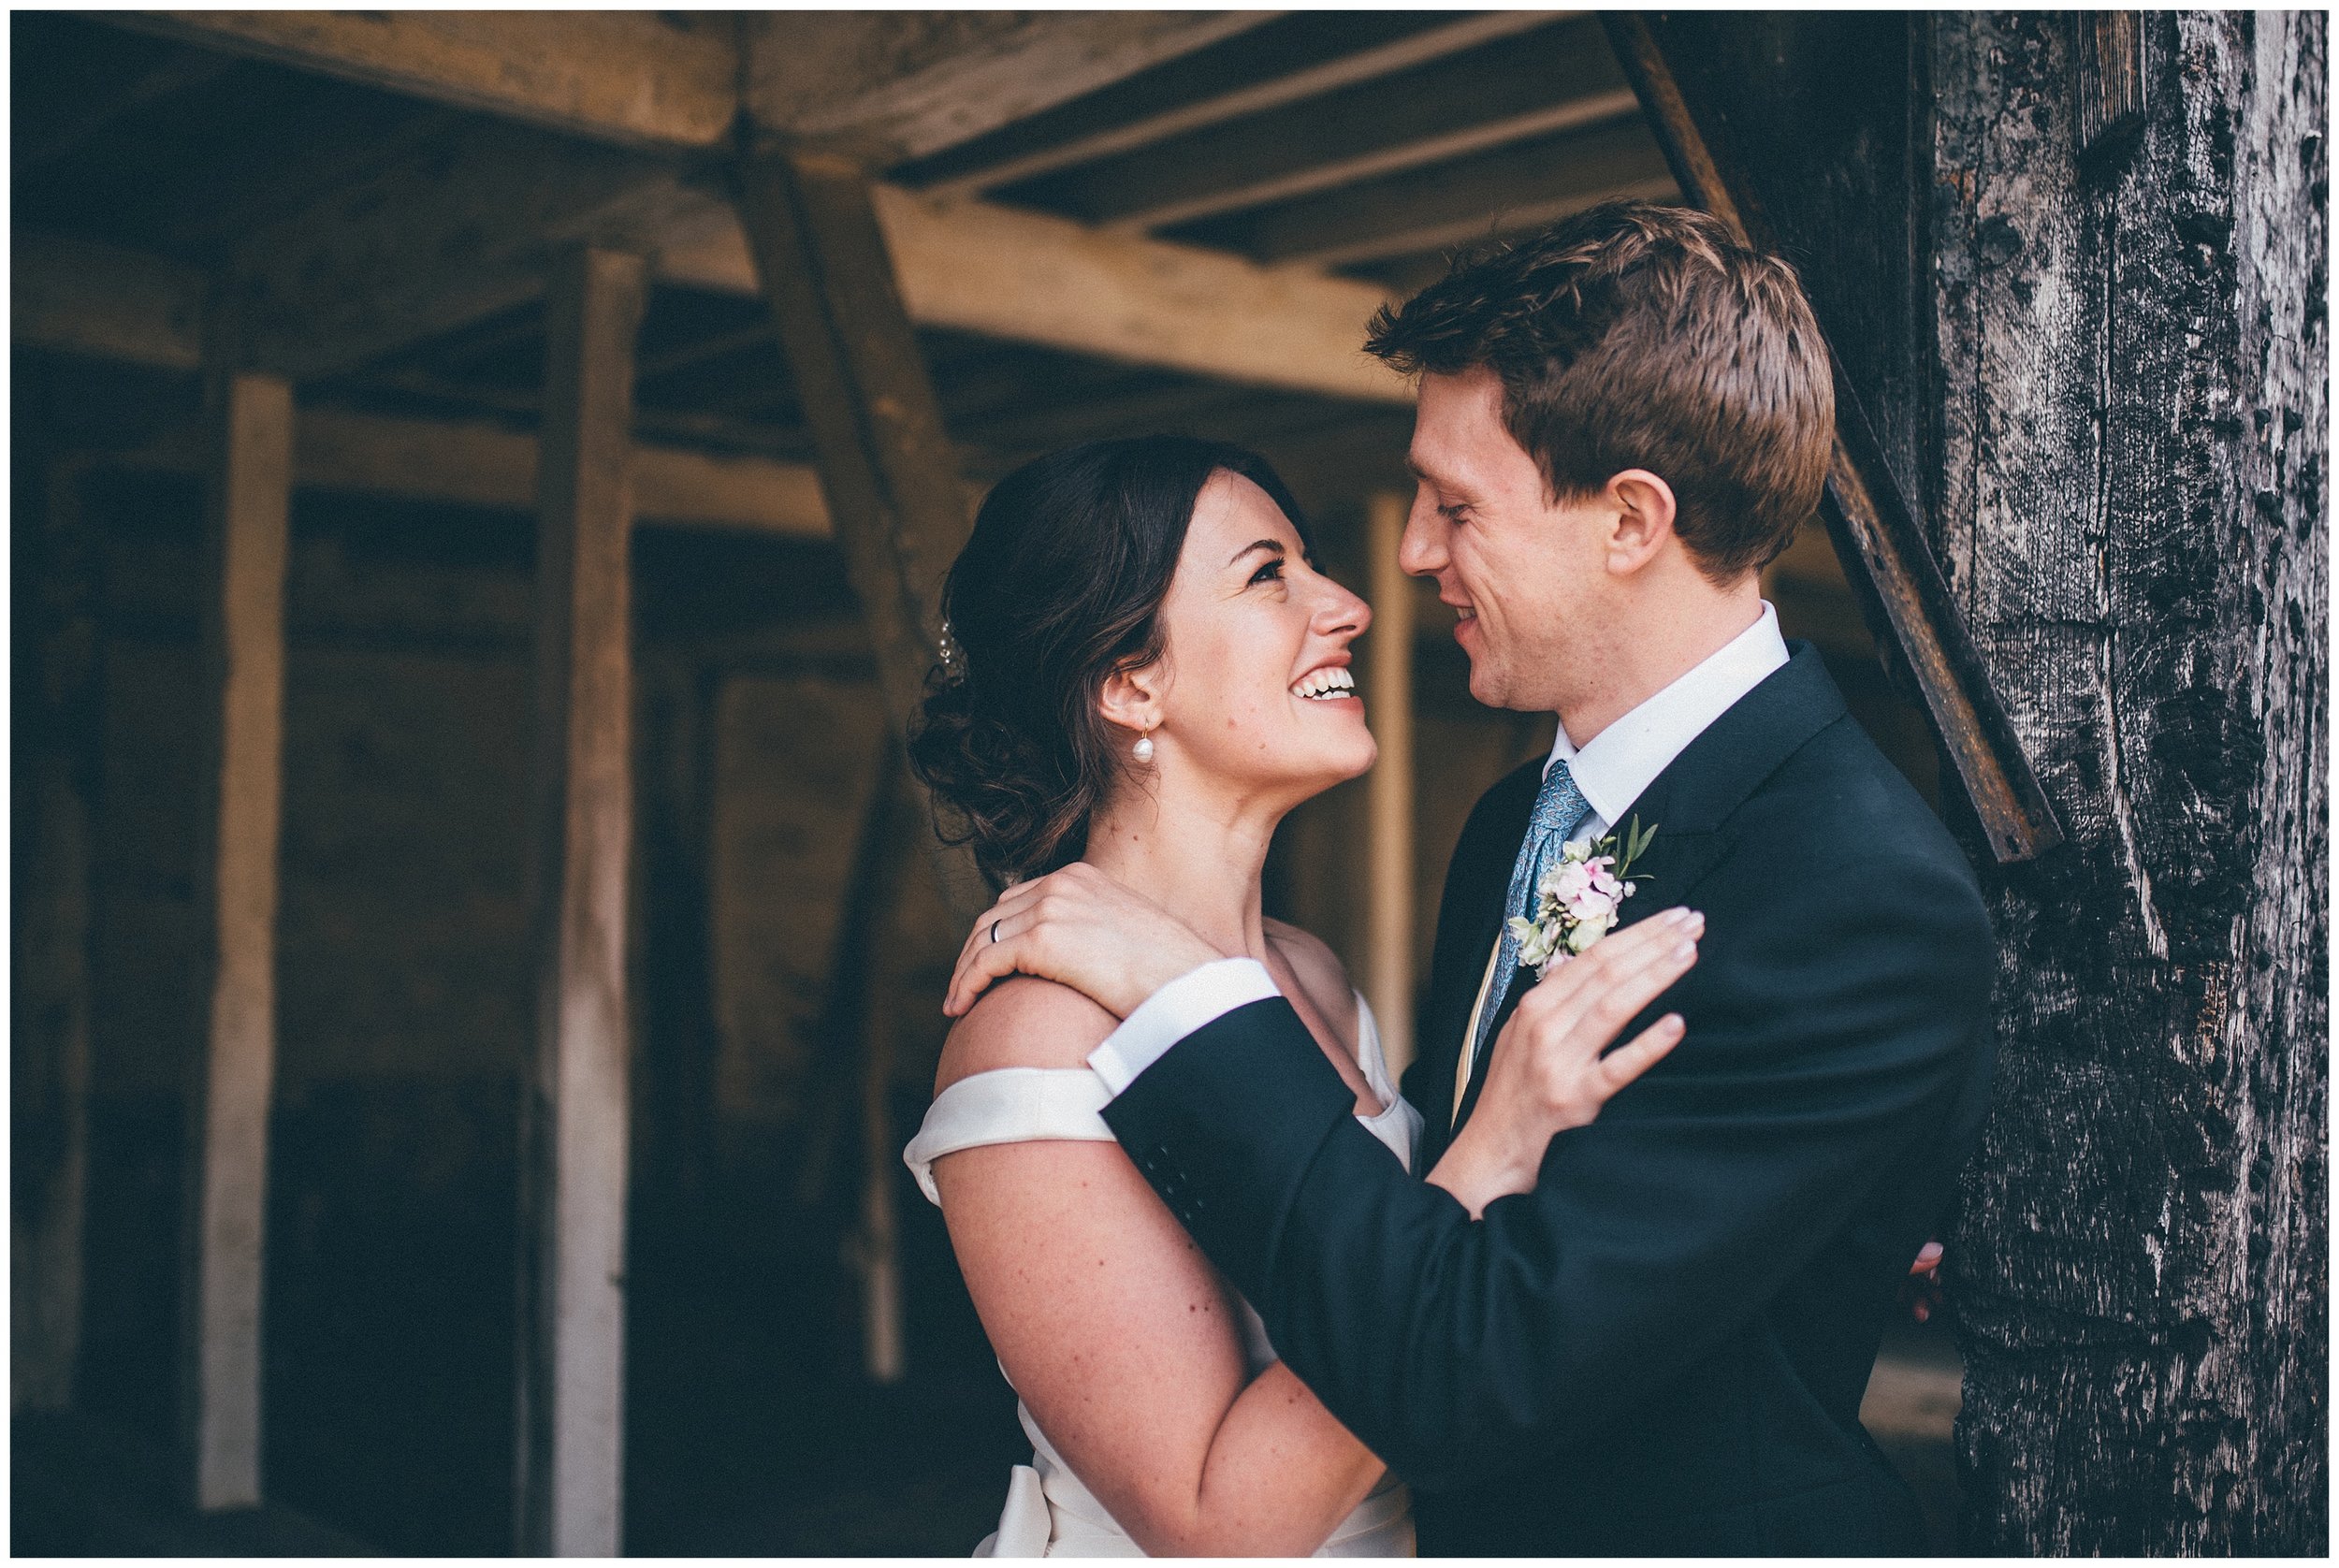 Bride and groom have their wedding photographs taken at Henham Park wedding barns.